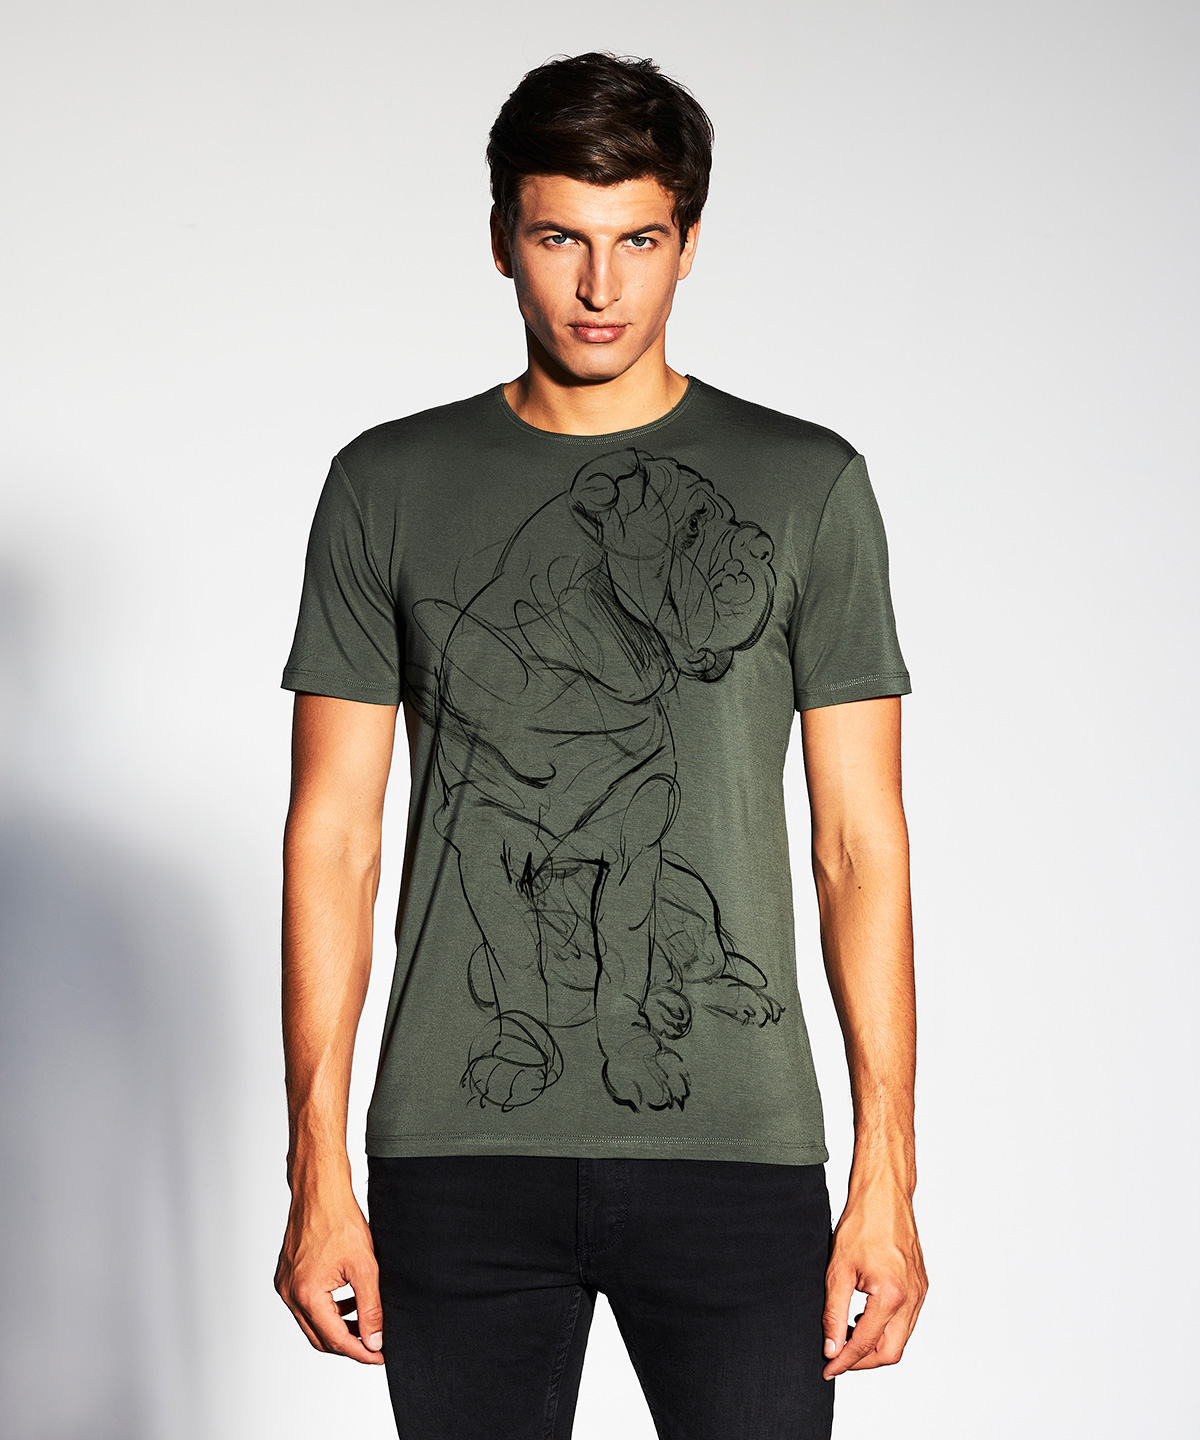 Neopolitan mastiff khaki t-shirt MAN